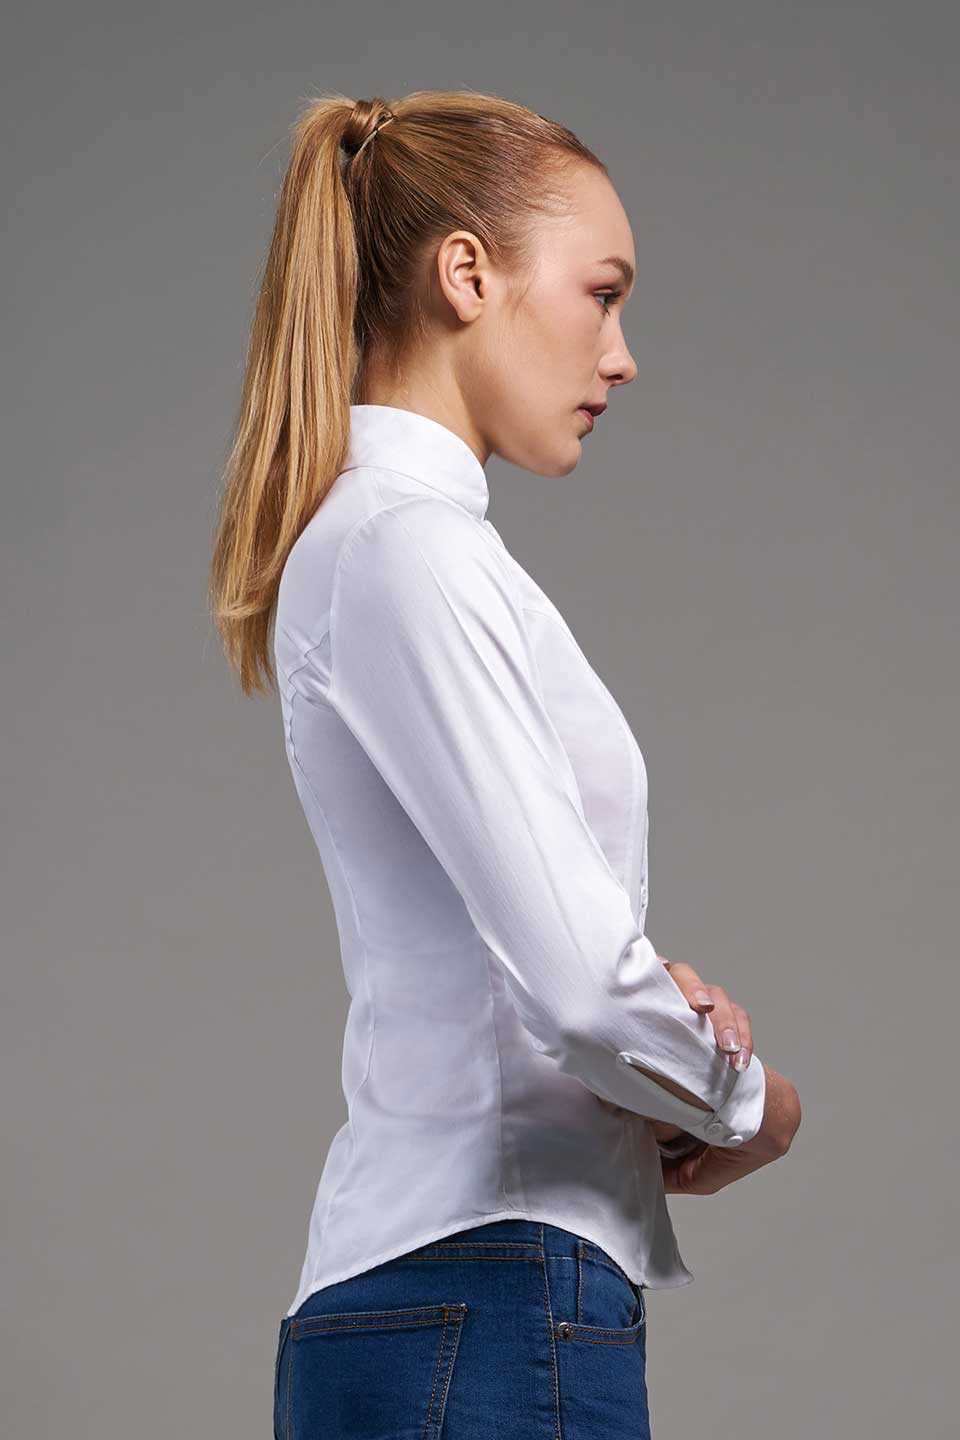 A Shirt by Adam Liew Charlotte White Shirt On Model